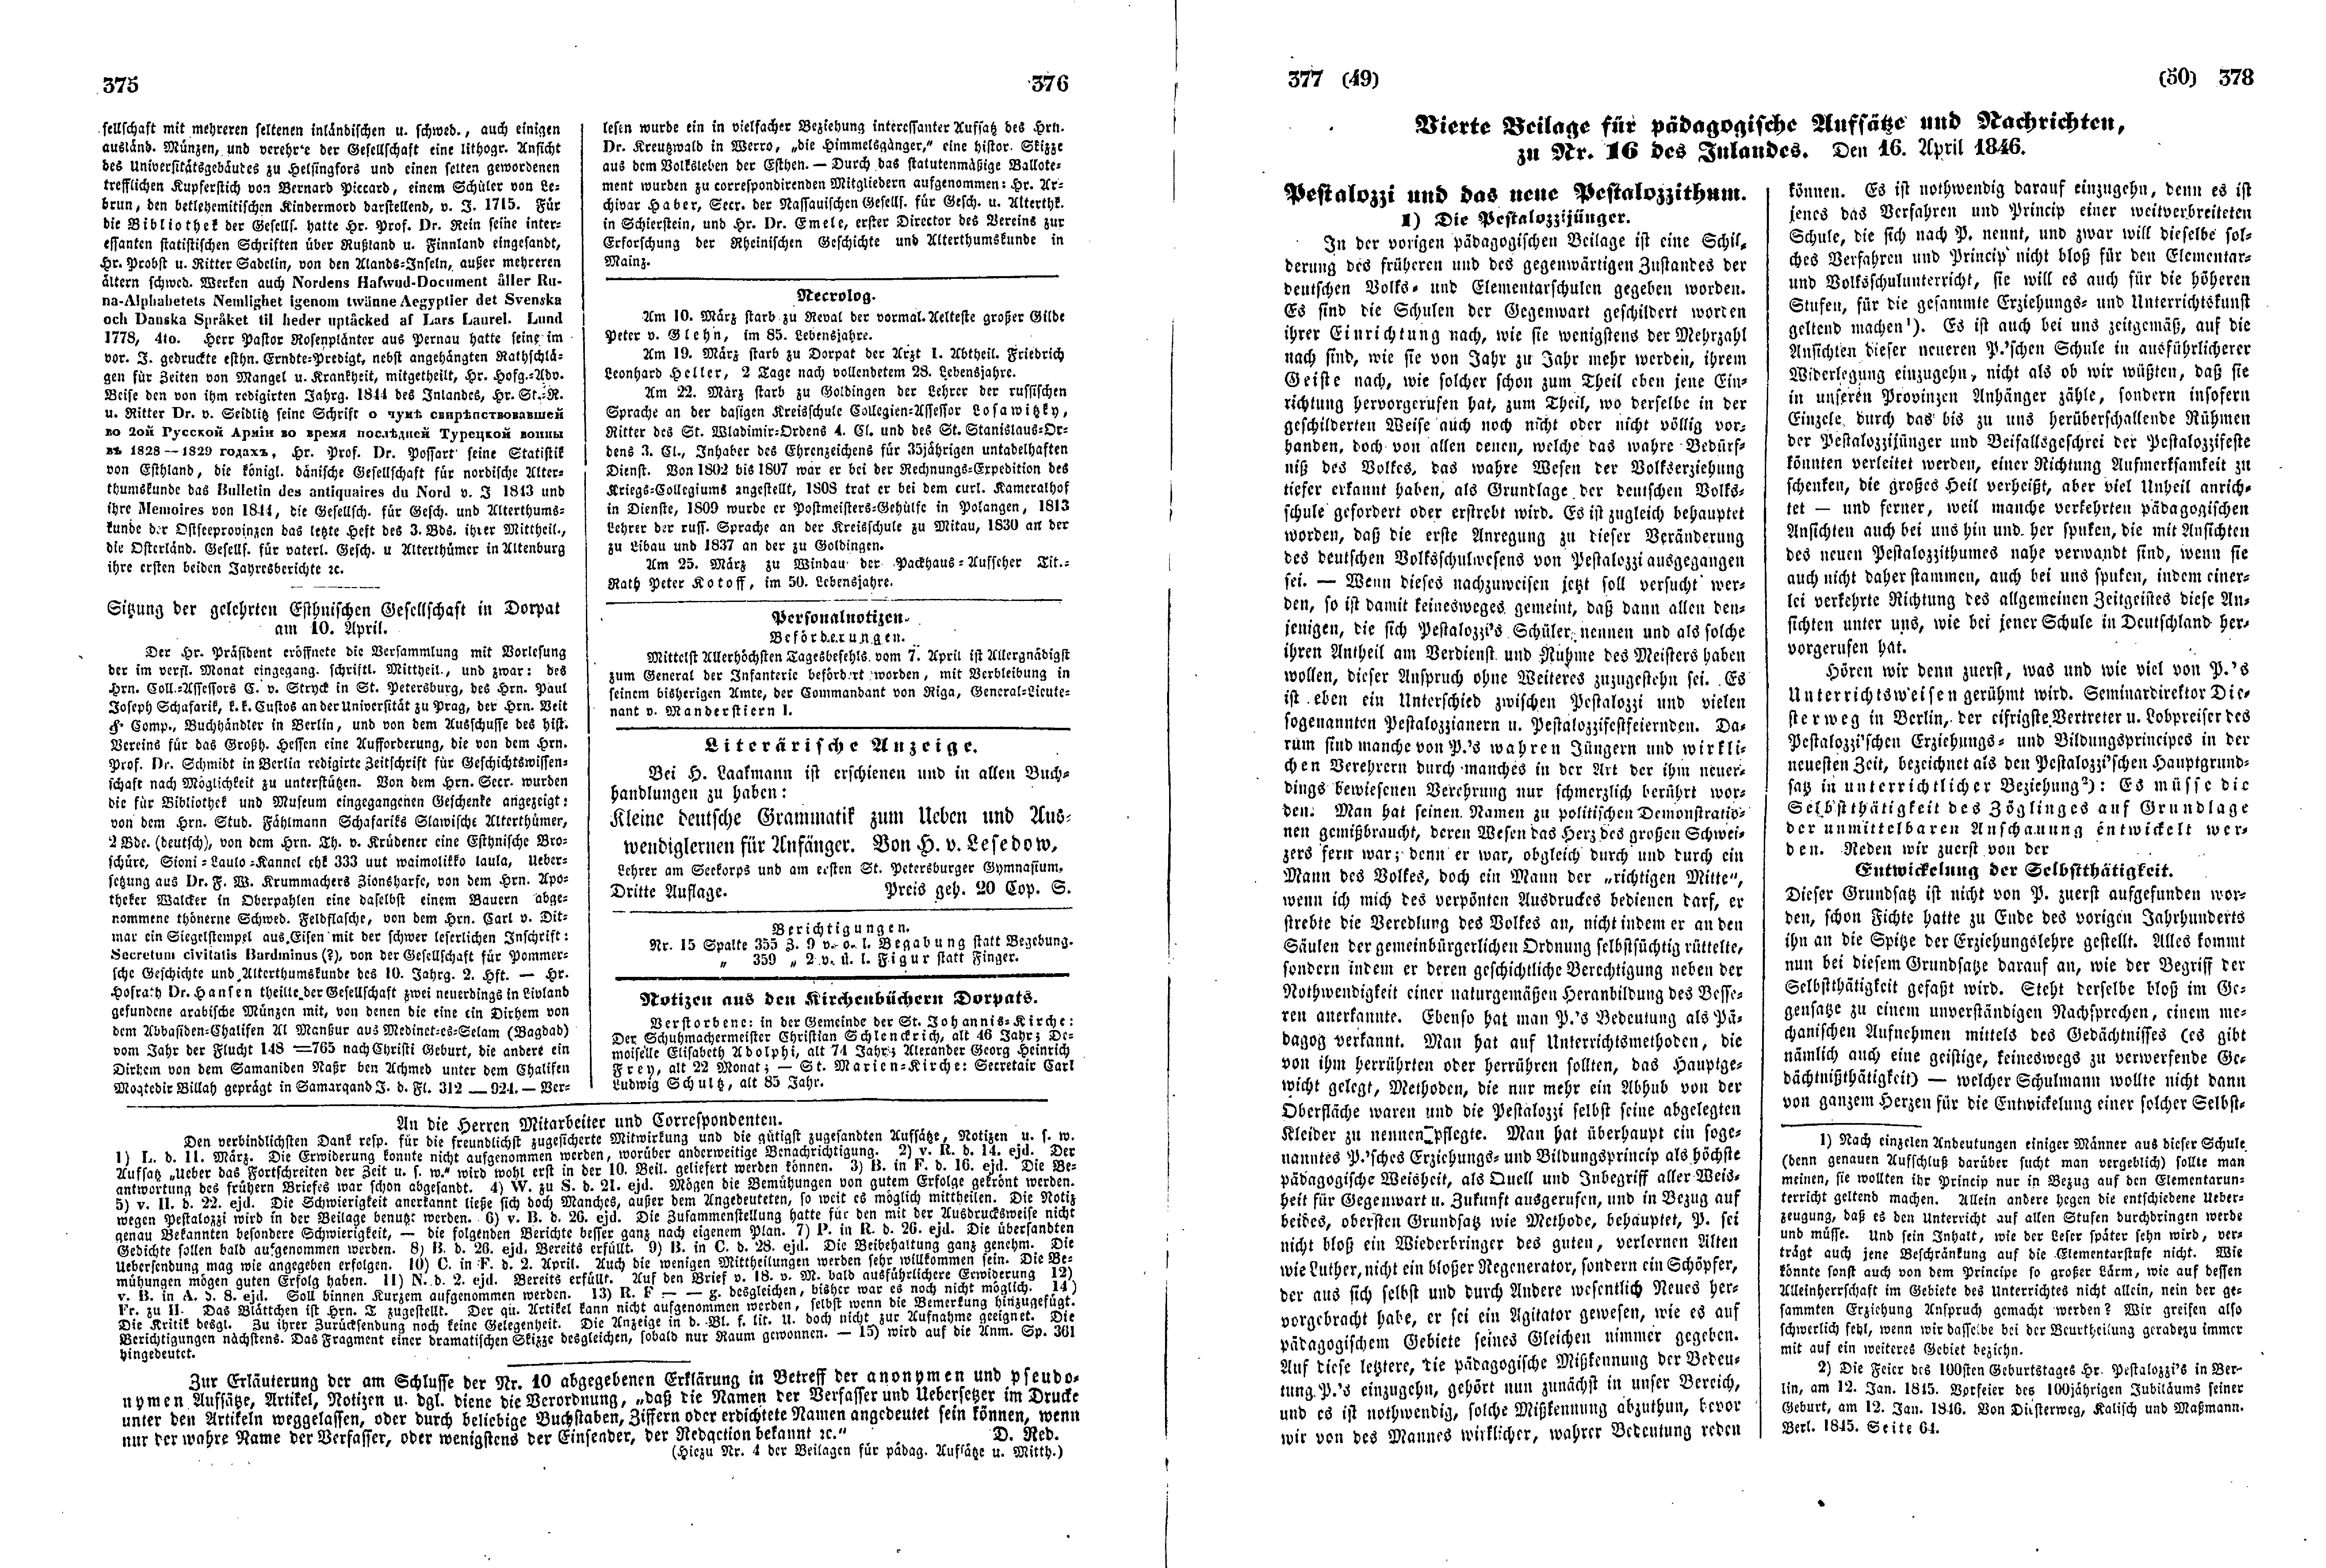 Das Inland [11] (1846) | 99. (375-378) Main body of text